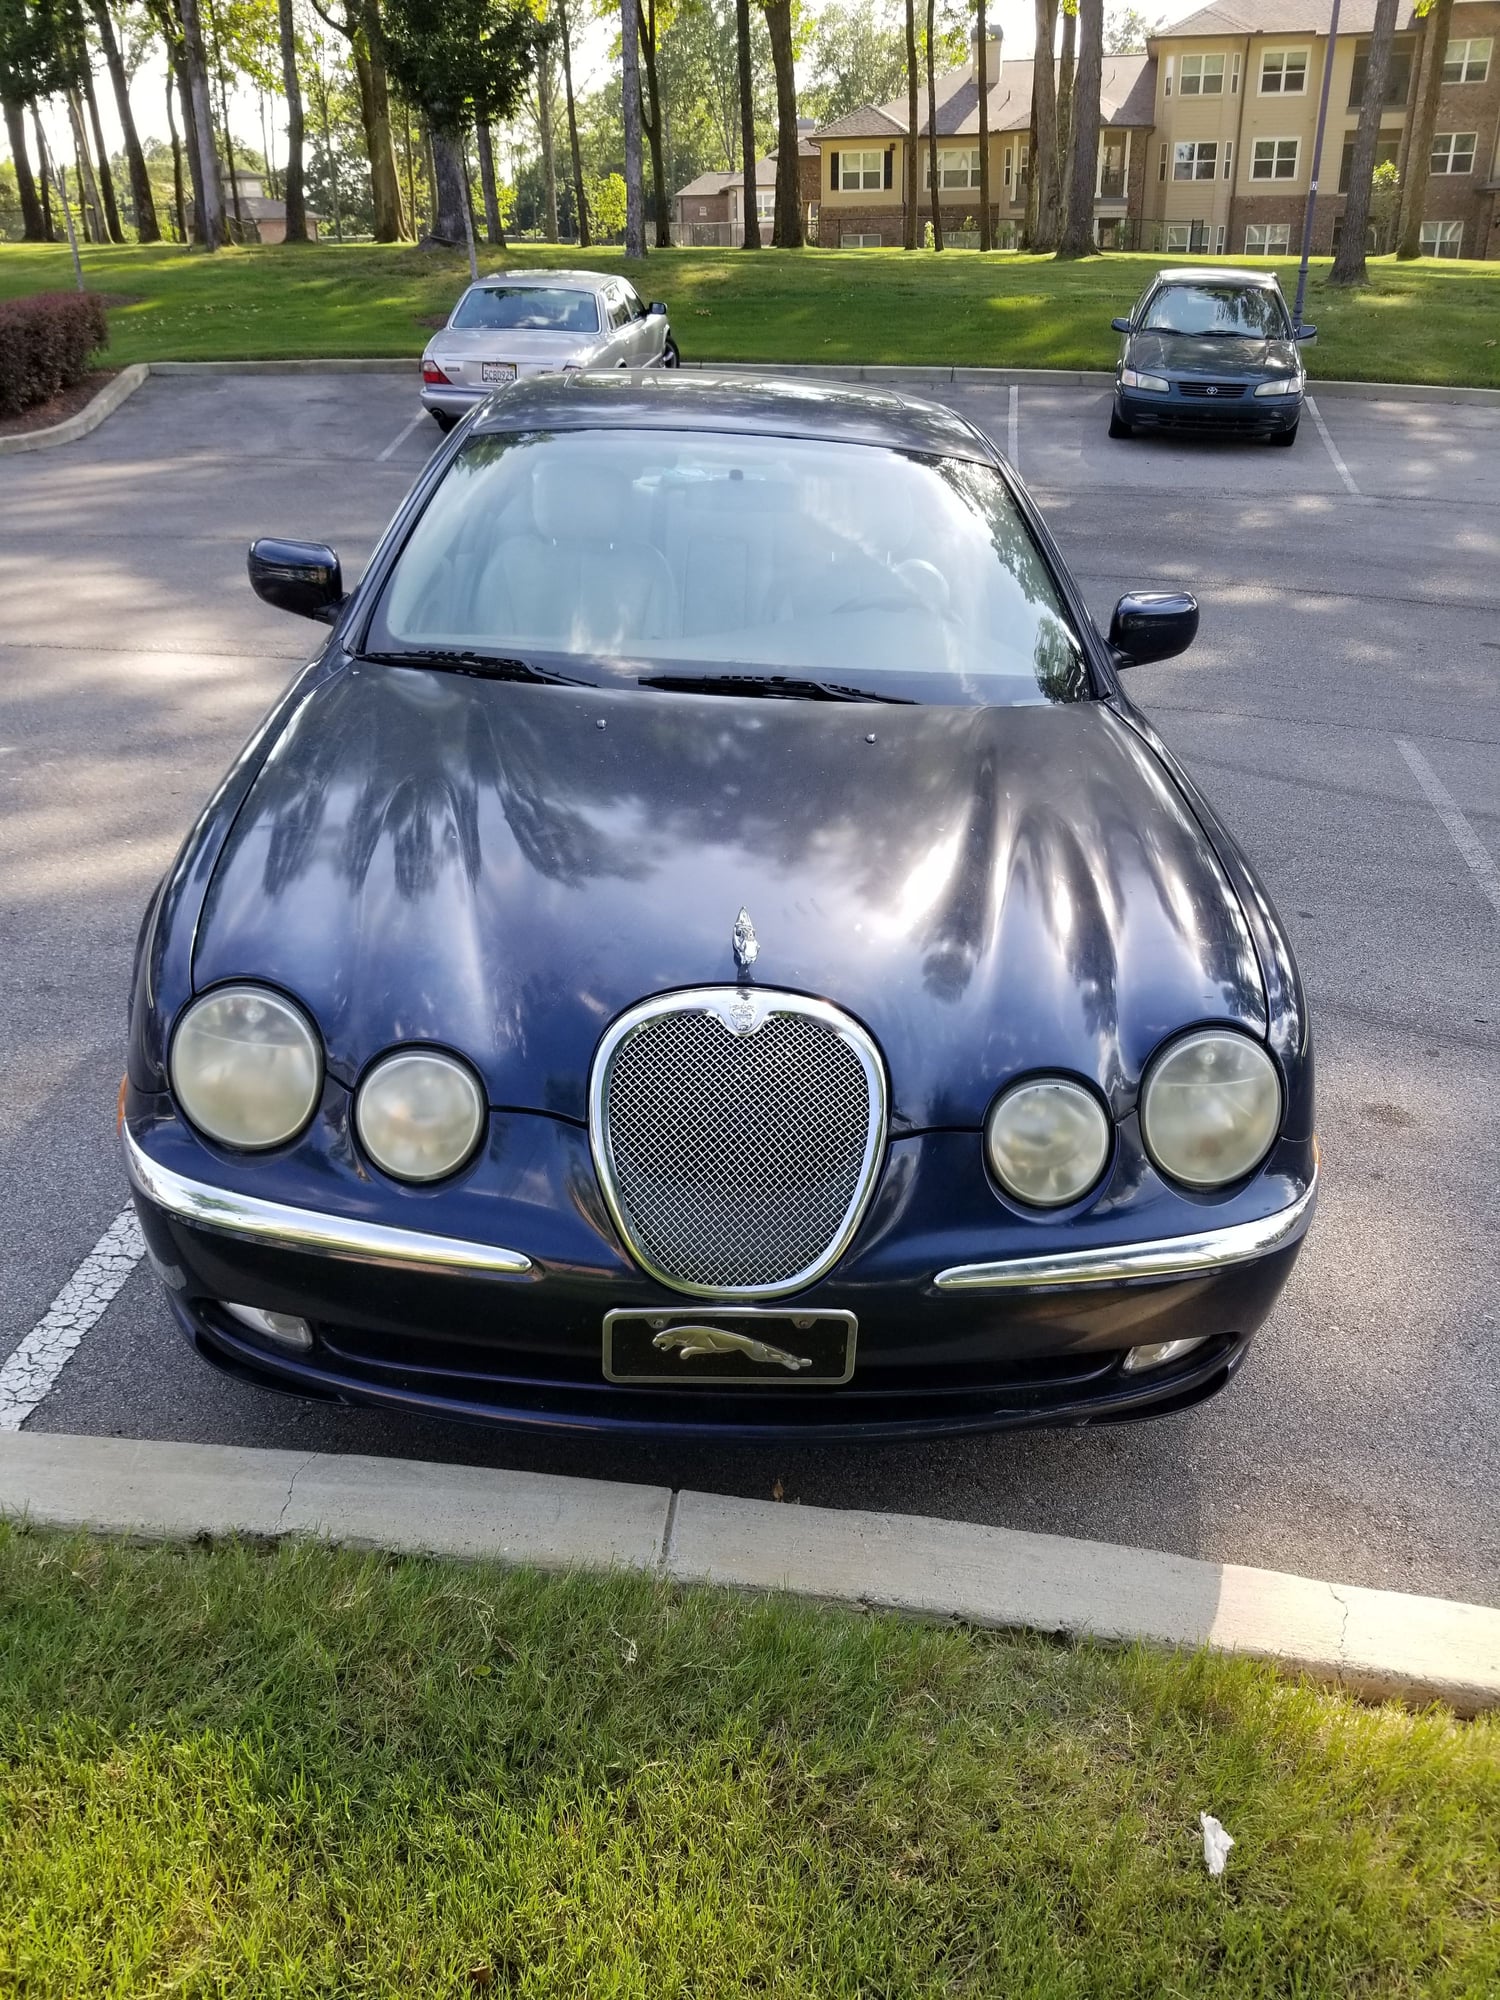 2001 Jaguar S-Type - 2001 Jaguar S-Type 3.0 V-6 Part Out - All Parts Available - Going To Junkyard 7/3 - Memphis, TN 38119, United States